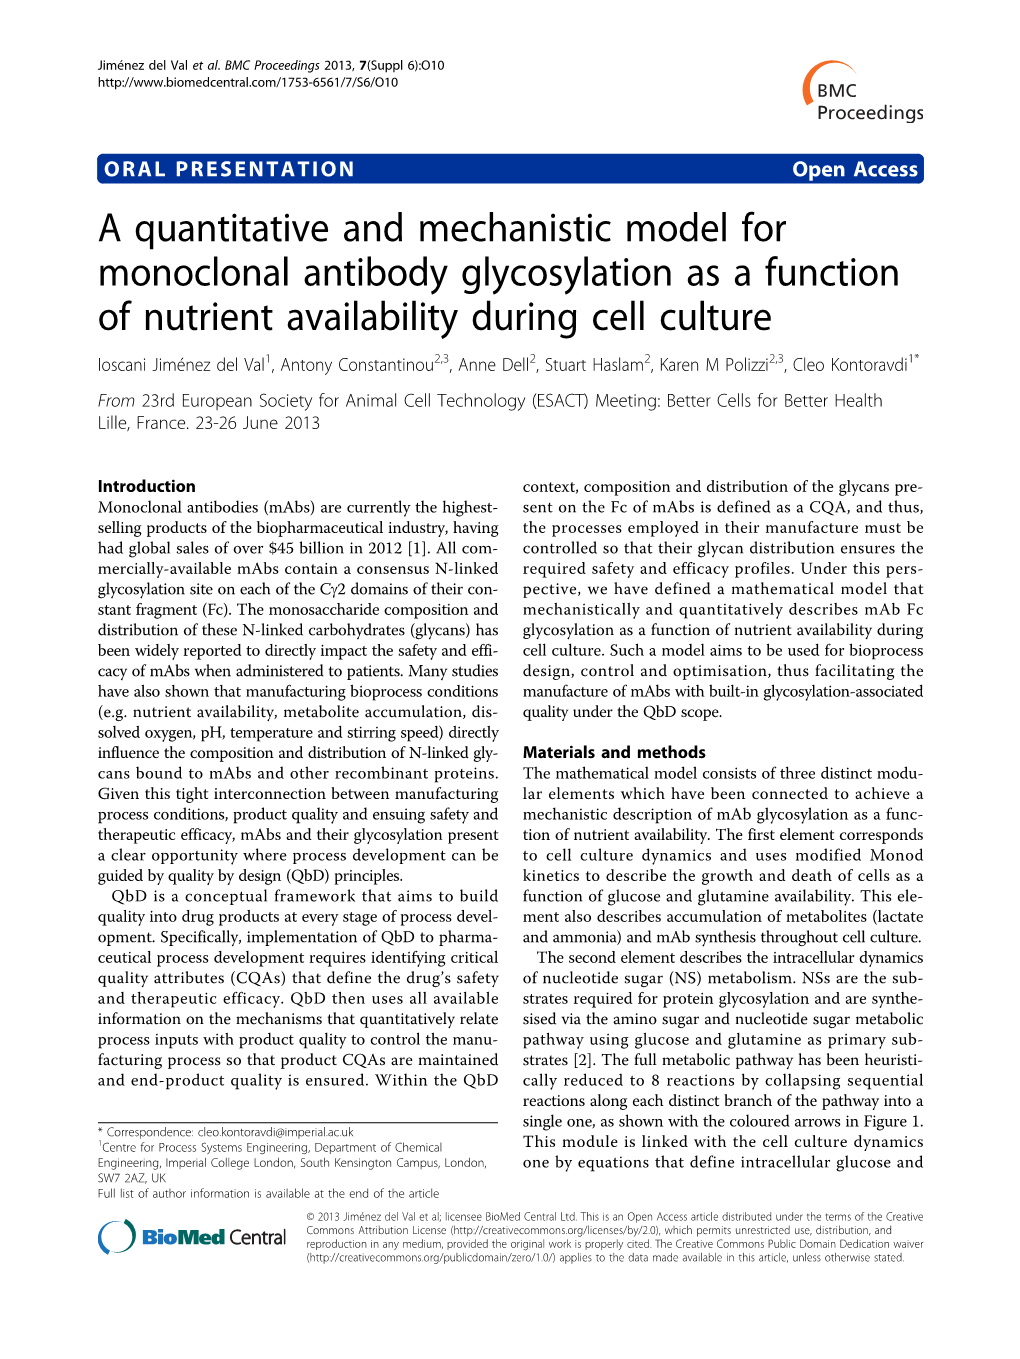 A Quantitative and Mechanistic Model for Monoclonal Antibody